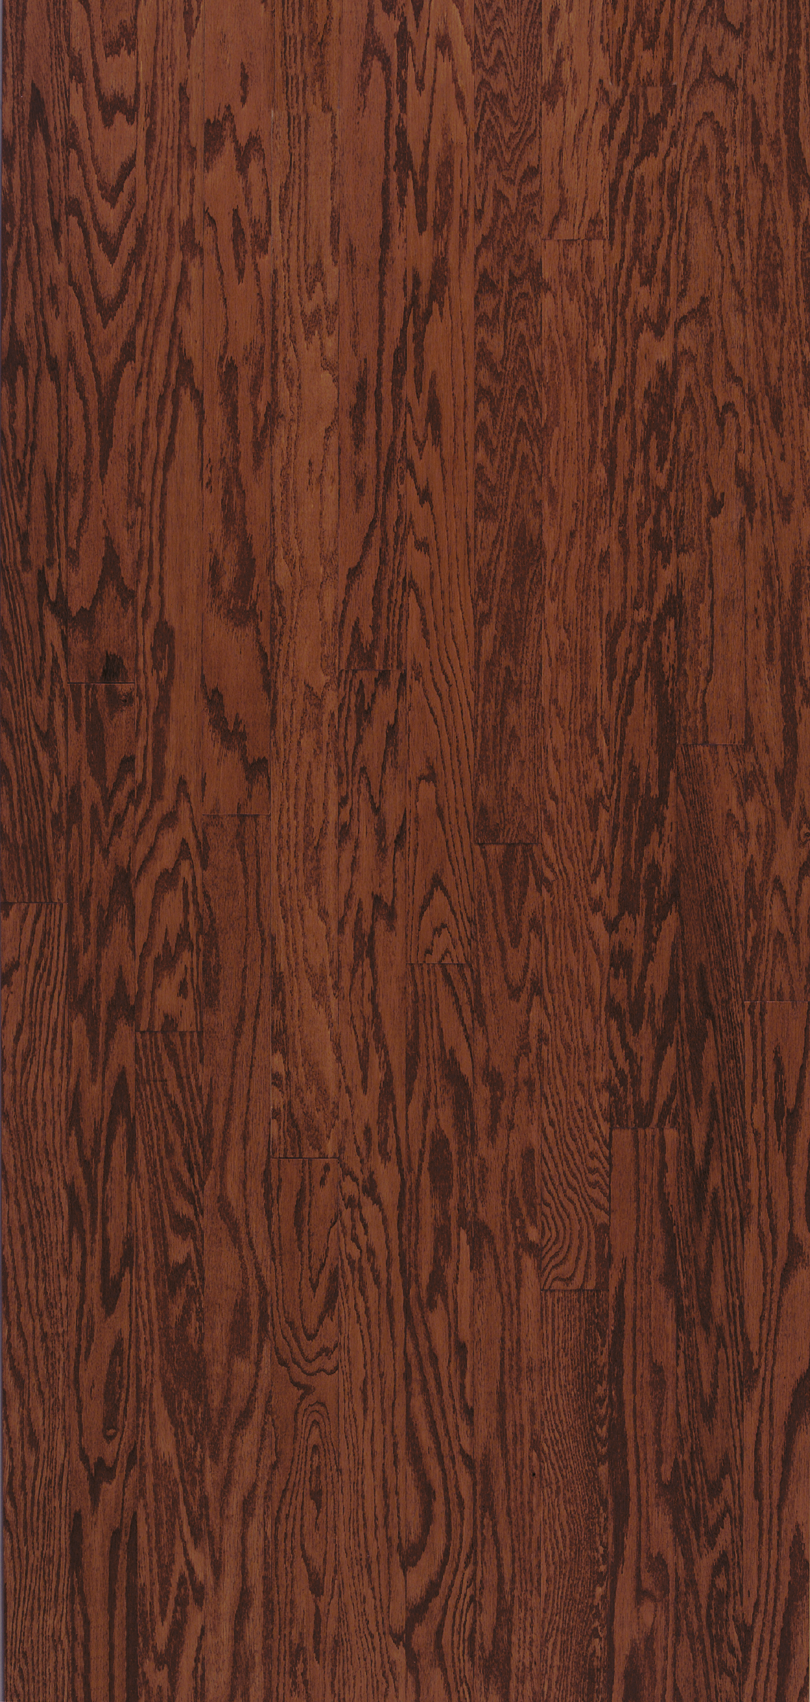 Cherry 5" - Turlington Collection - Engineered Hardwood Flooring by Bruce